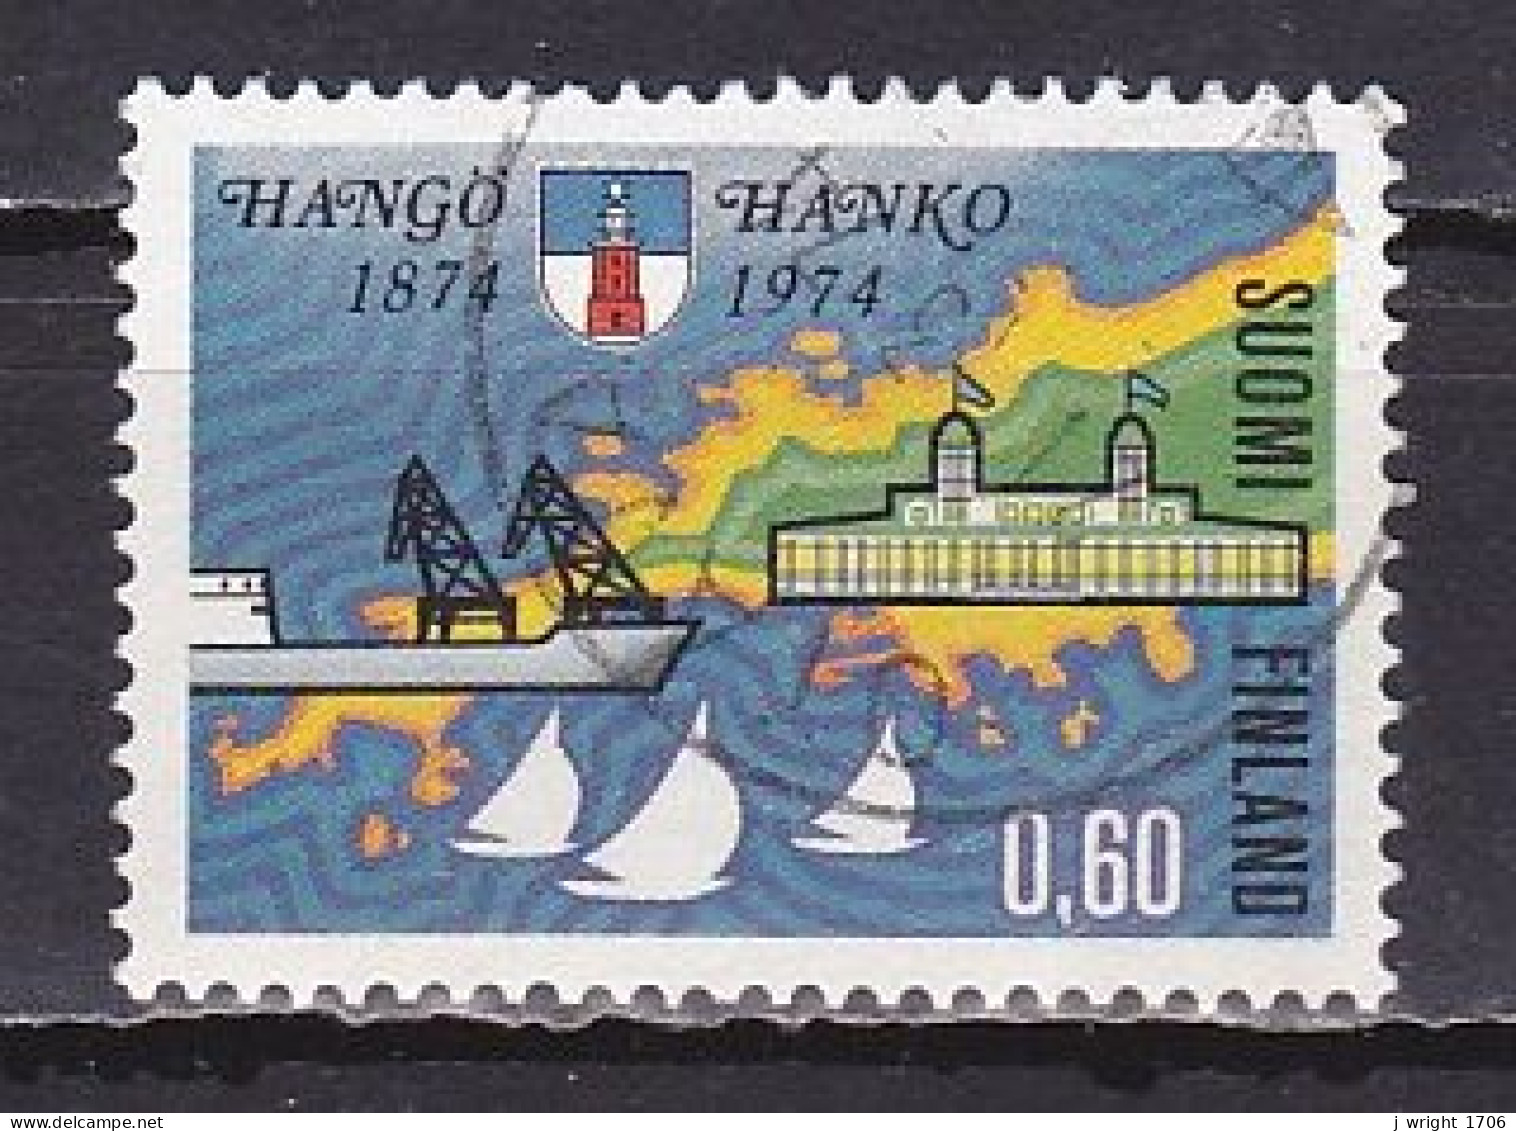 Finland, 1974, Hanko/Hangö Centenary, 0.60mk, USED - Used Stamps